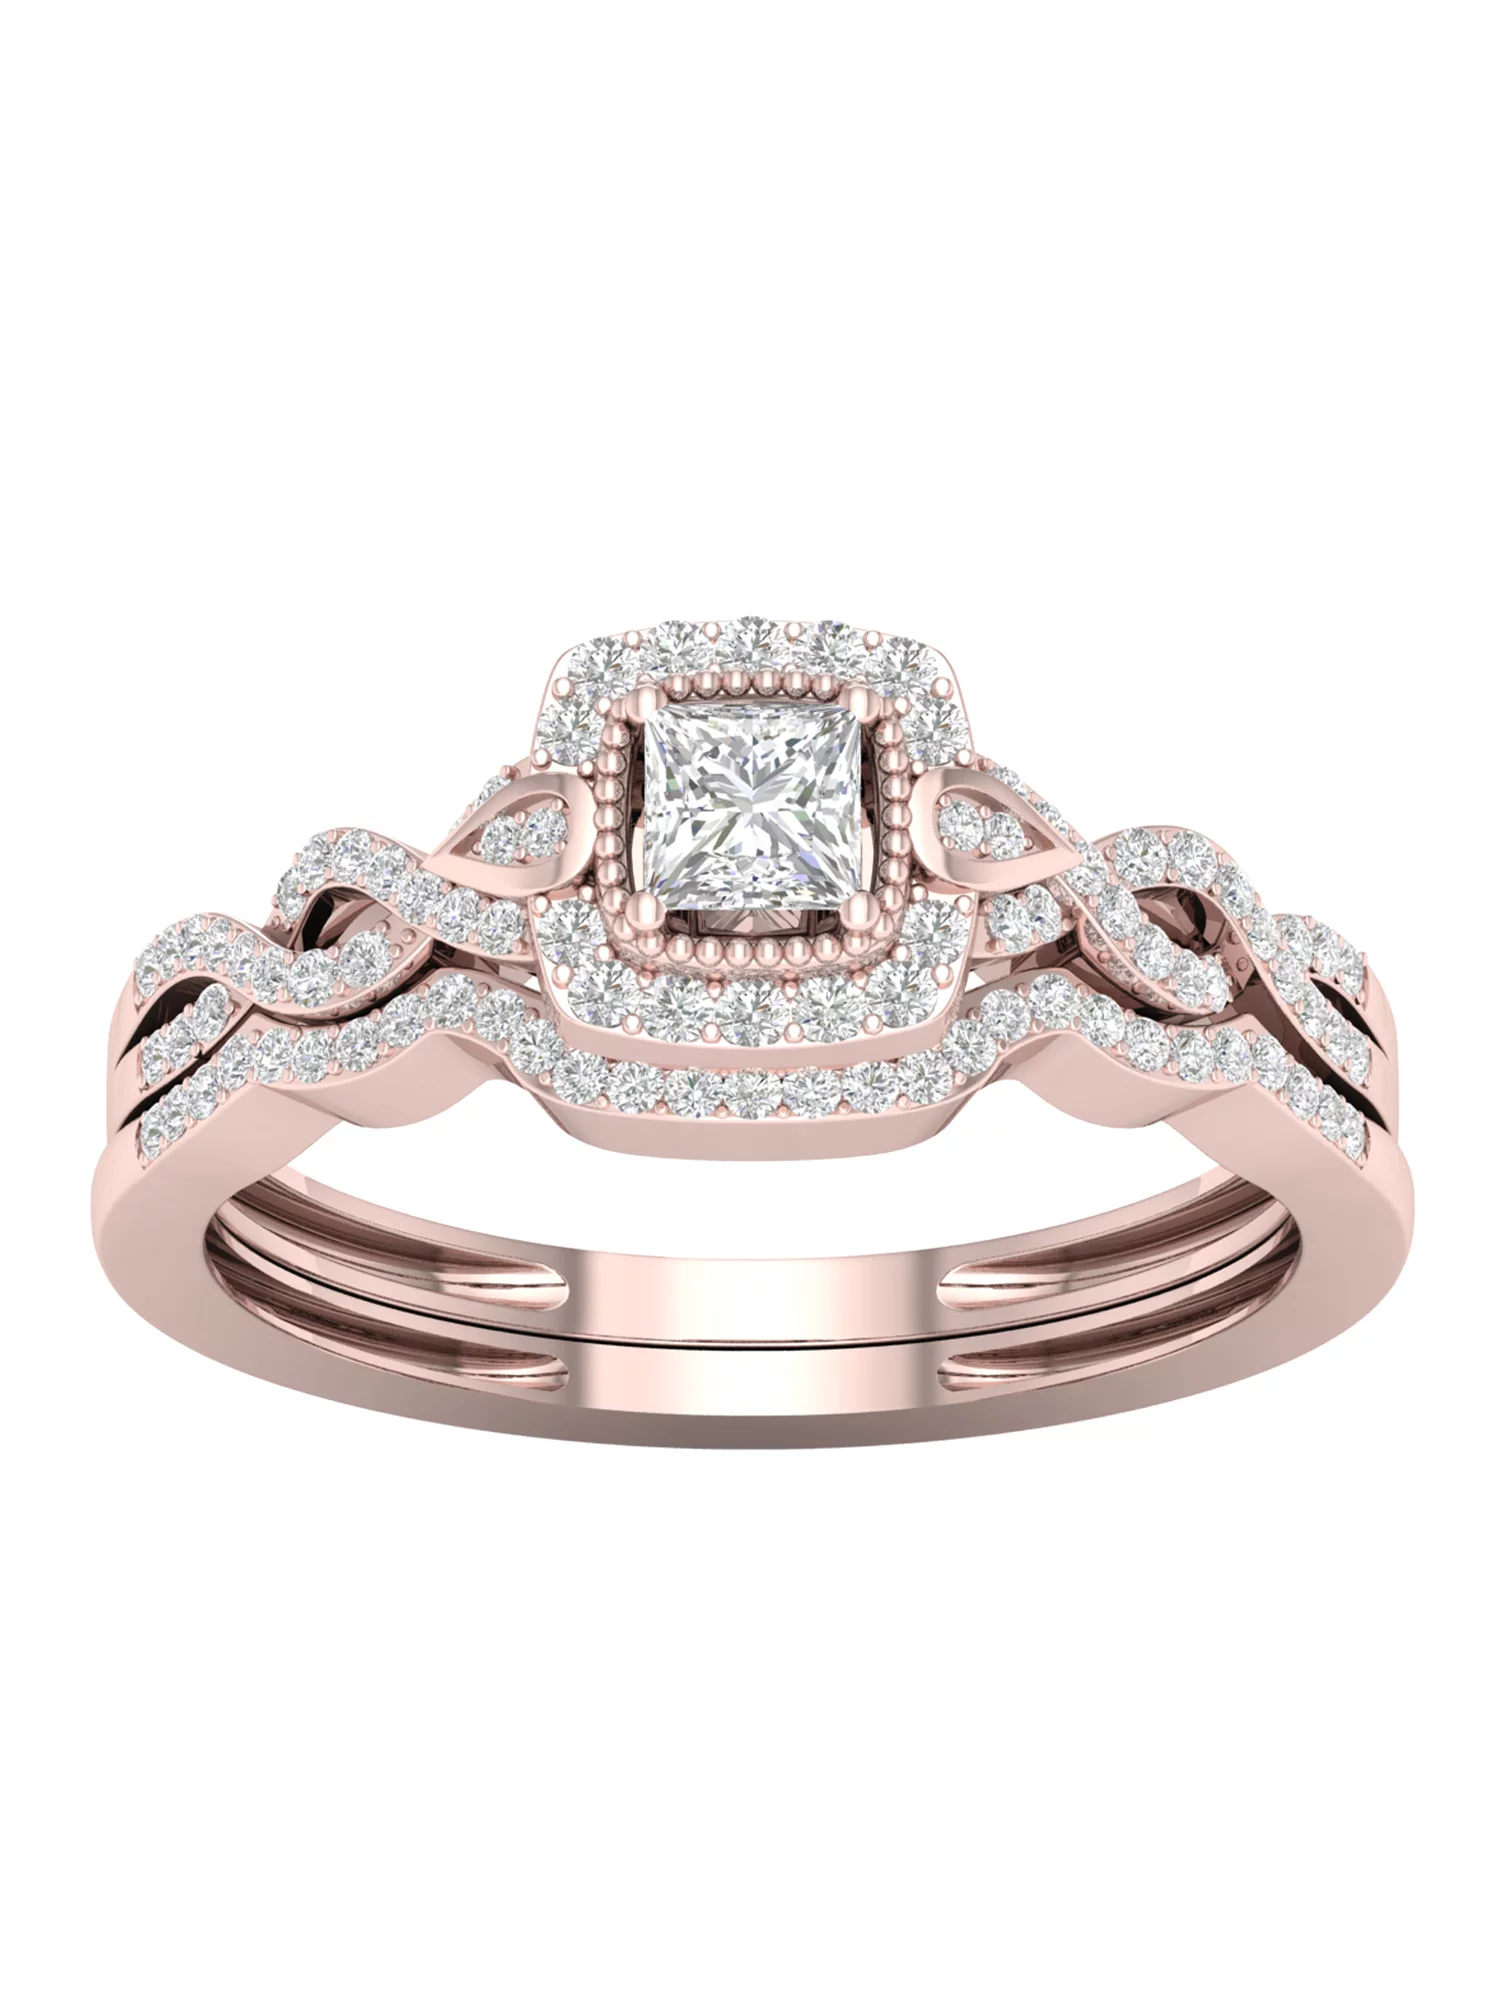 IGI Certified 1/3Ct TDW Diamond 10k Rose Gold Twist Shank Halo Bridal Set (H-I, I2)